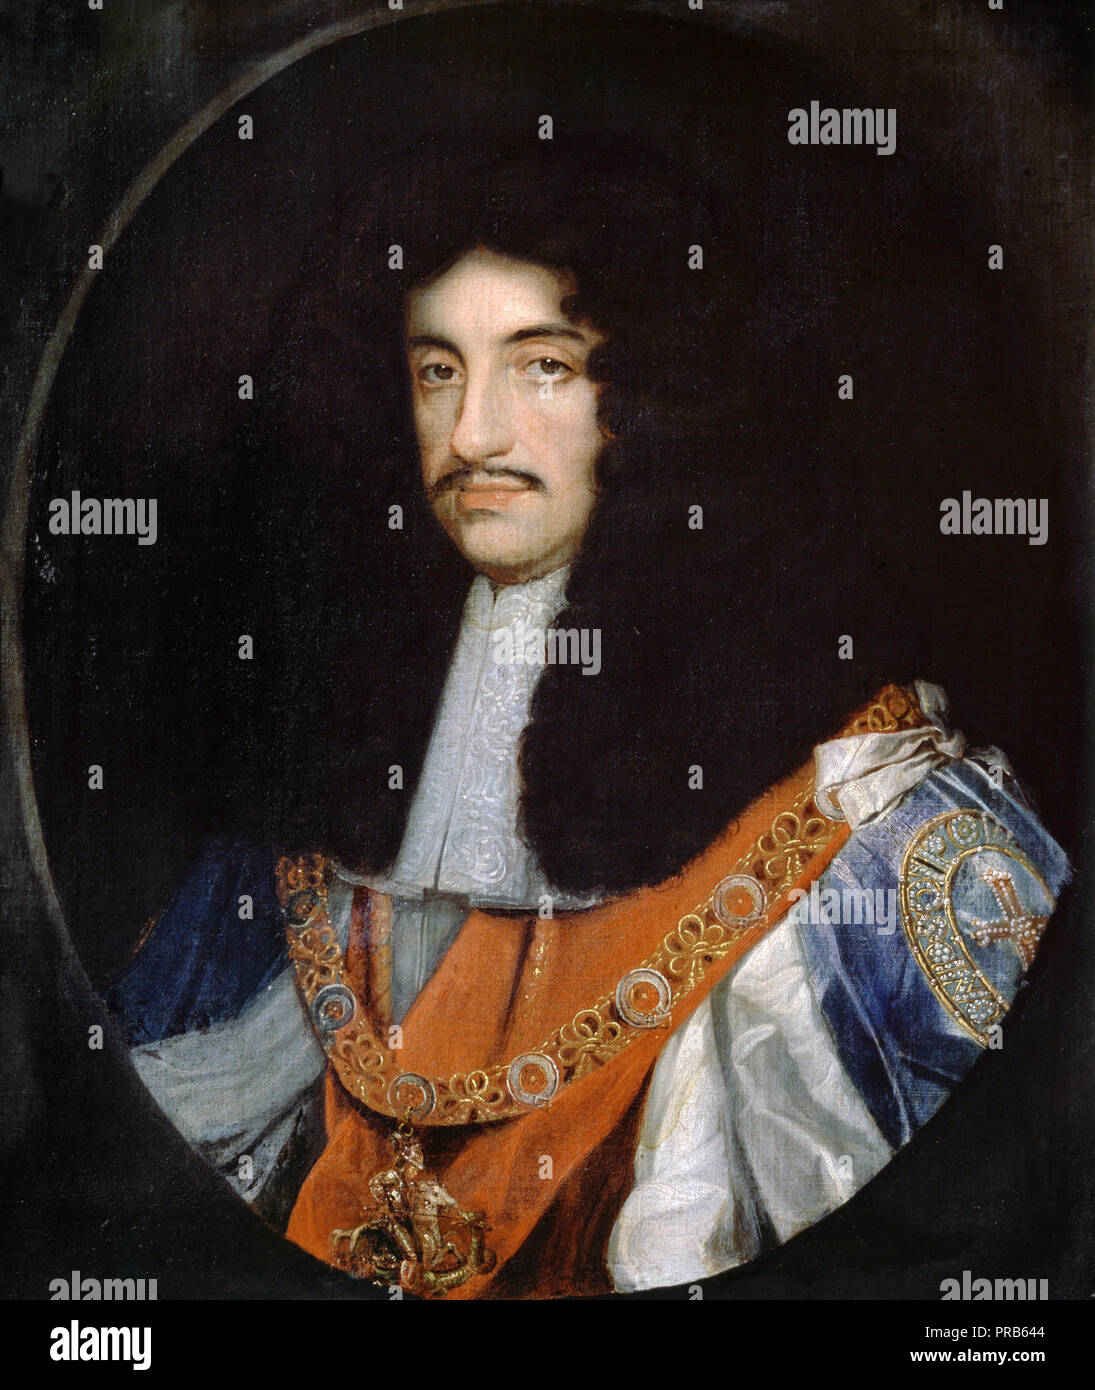 John Michael Wright, Carlo II, tardo XVII secolo, olio su tela, Dulwich Picture Gallery di Londra, Inghilterra. Foto Stock